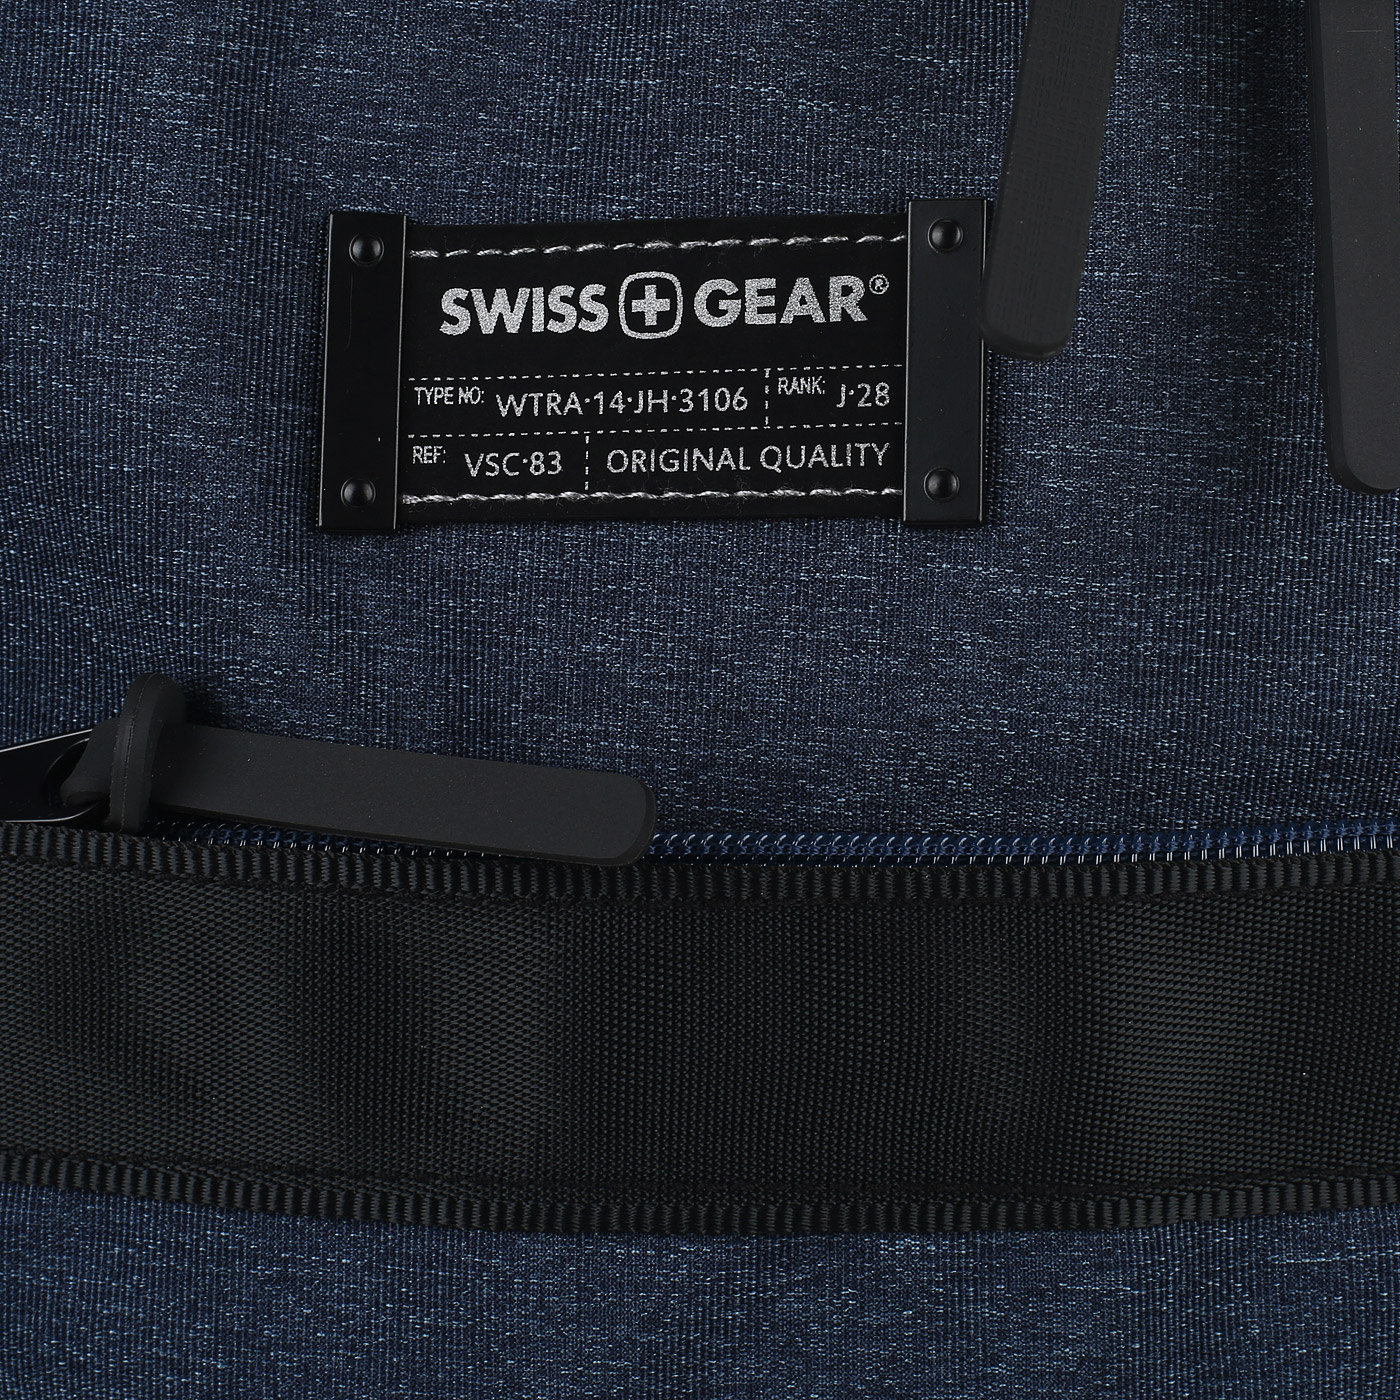 Рюкзак Swissgear 